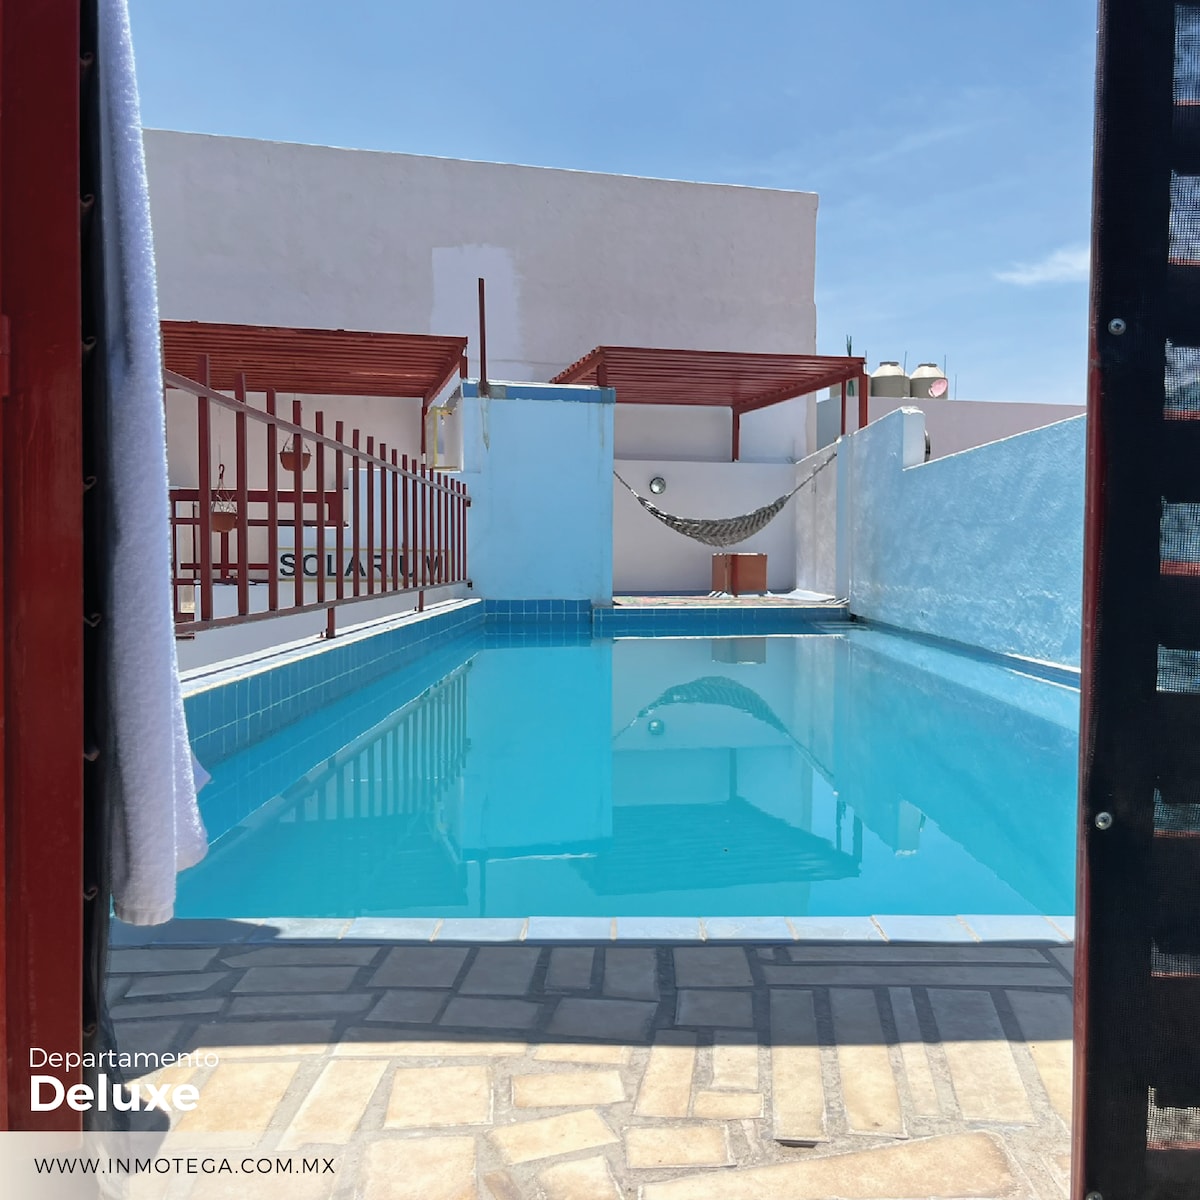 Deluxe Apartment / Pool / Terrace - Inmotega